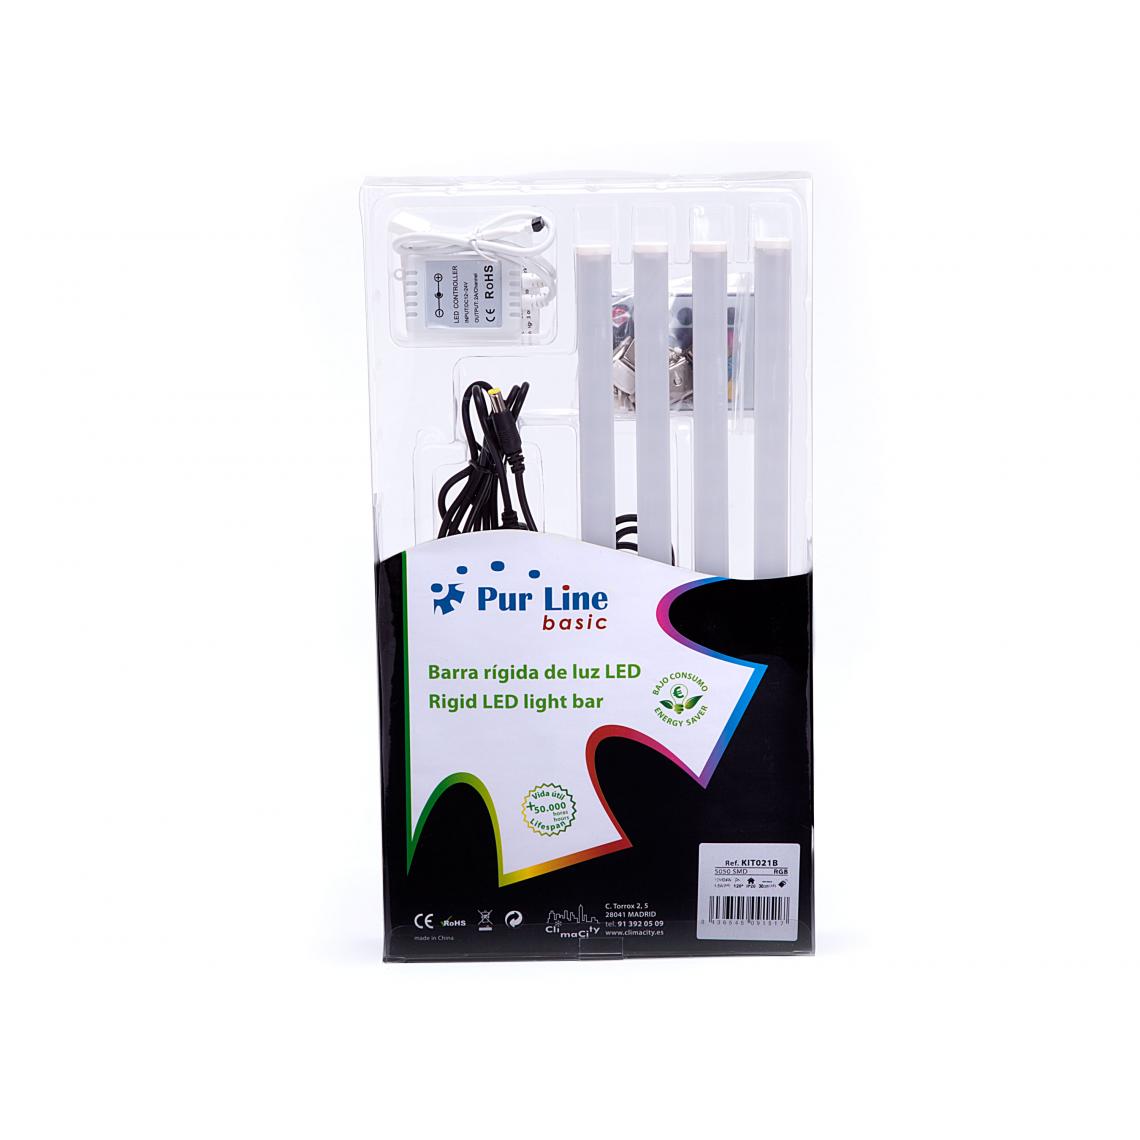 Purline - Kit de 4 barres rigides translucides de 5050 LED SMD RGB - Ruban LED